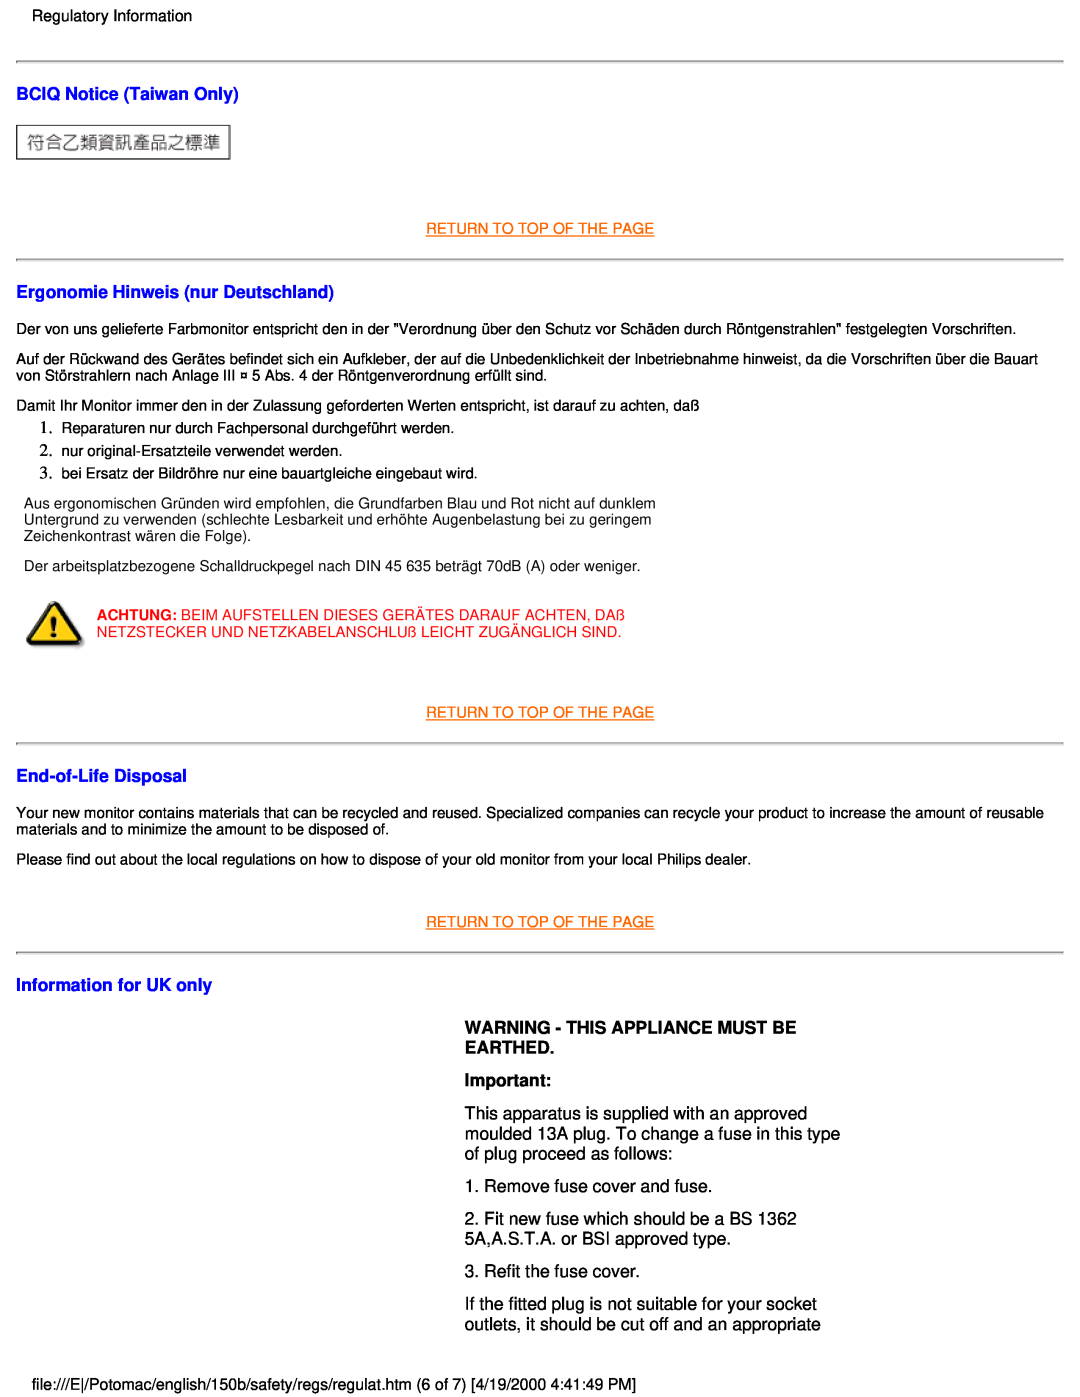 Philips 150B BCIQ Notice Taiwan Only, Ergonomie Hinweis nur Deutschland, End-of-Life Disposal, Information for UK only 